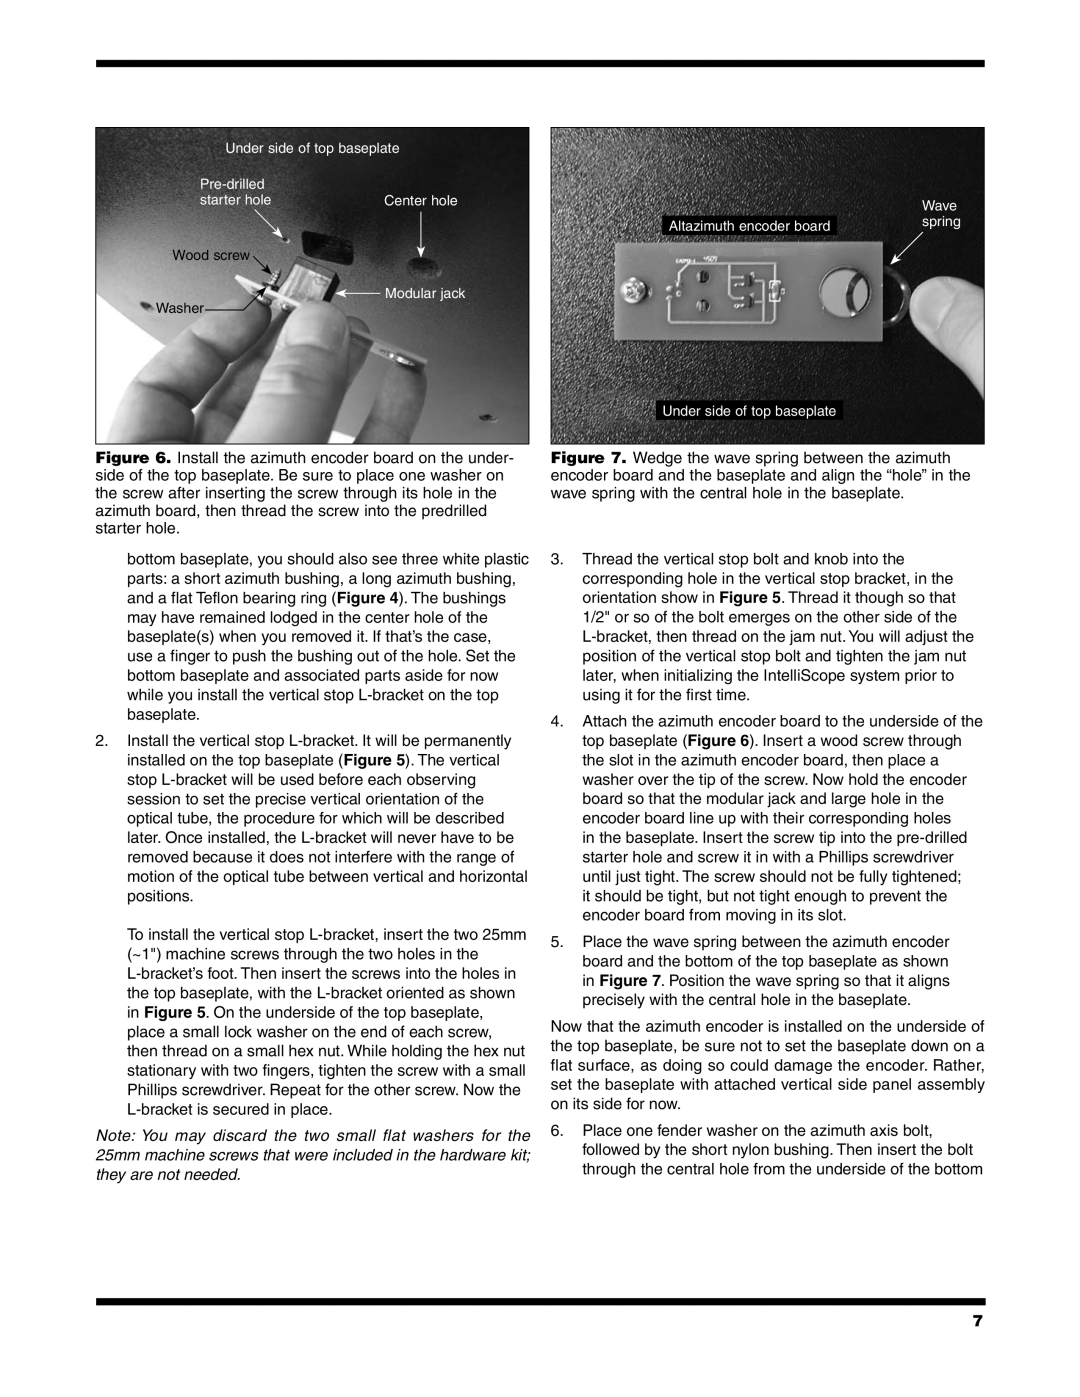 Orion 6/6I instruction manual Wood screw Washer 